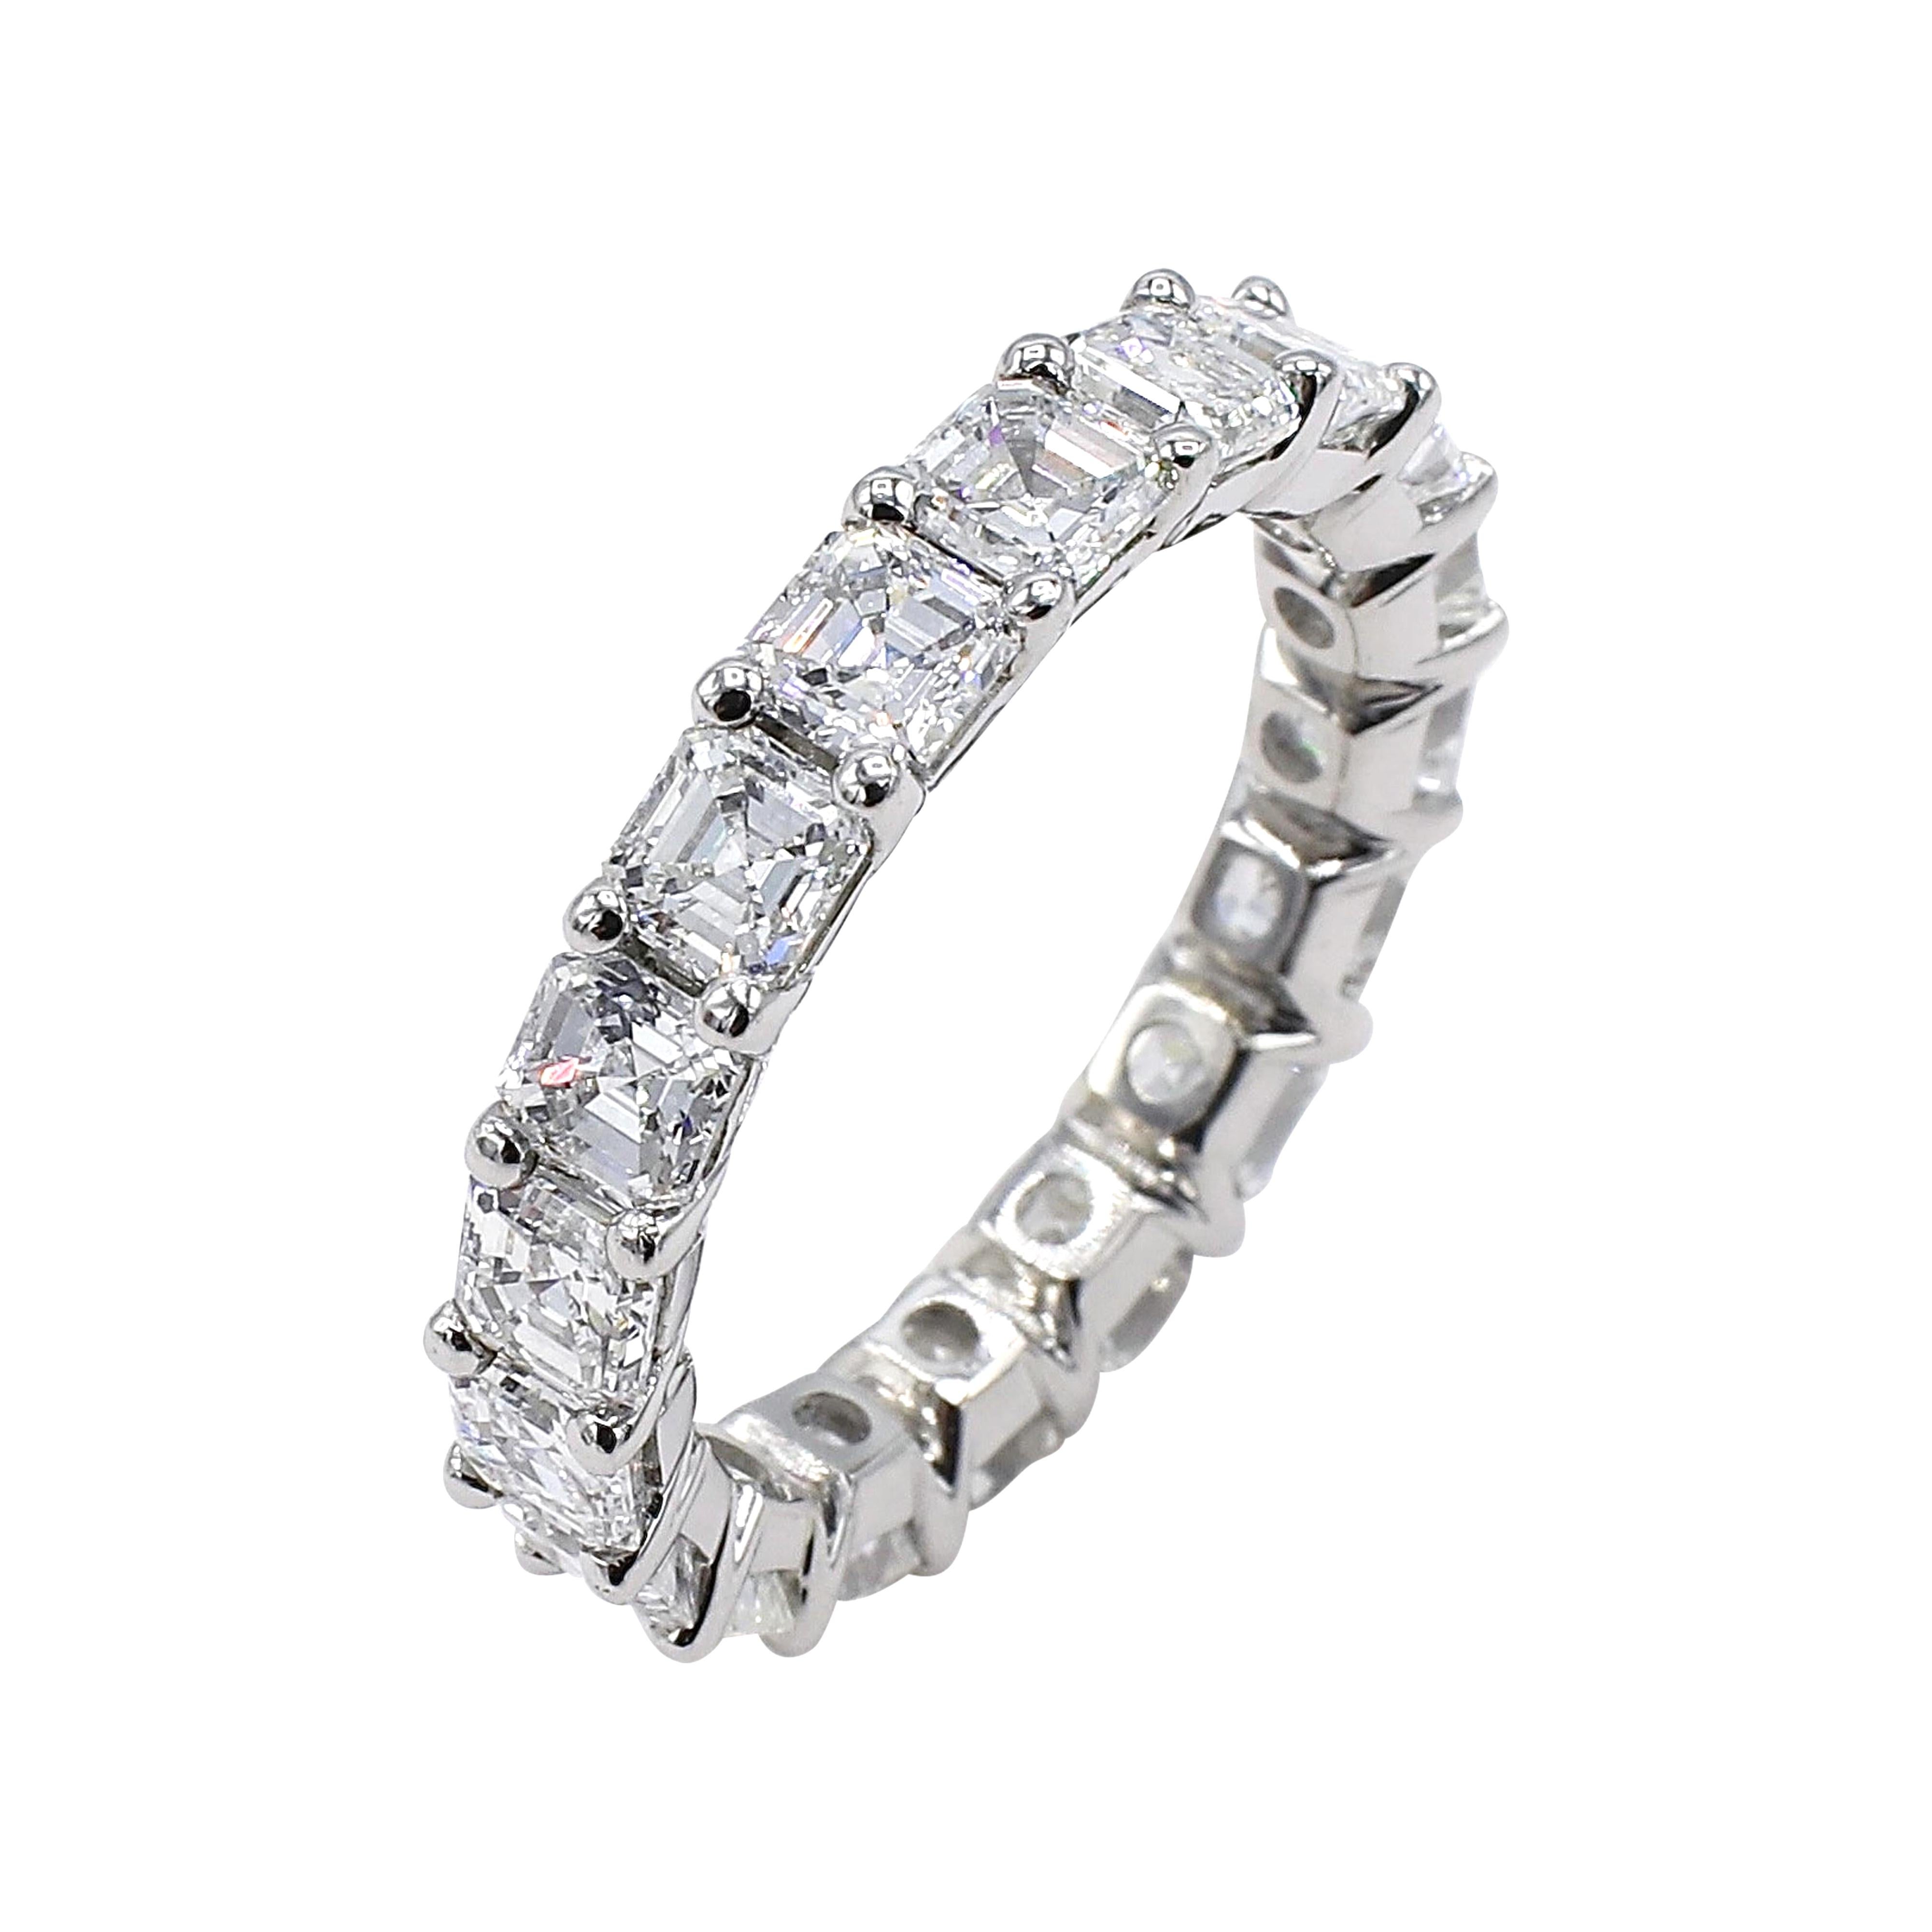 Platinum 3.60 CTW Asscher Diamond Eternity Band Size 5.5 
Metal: Platinum
Diamonds: 18 Asscher cut diamonds approx. 3.60 CTW F-G VS
Weight: 3.79 grams
Size: 5.5 (US)
Width: 3.3MM
Signed: 